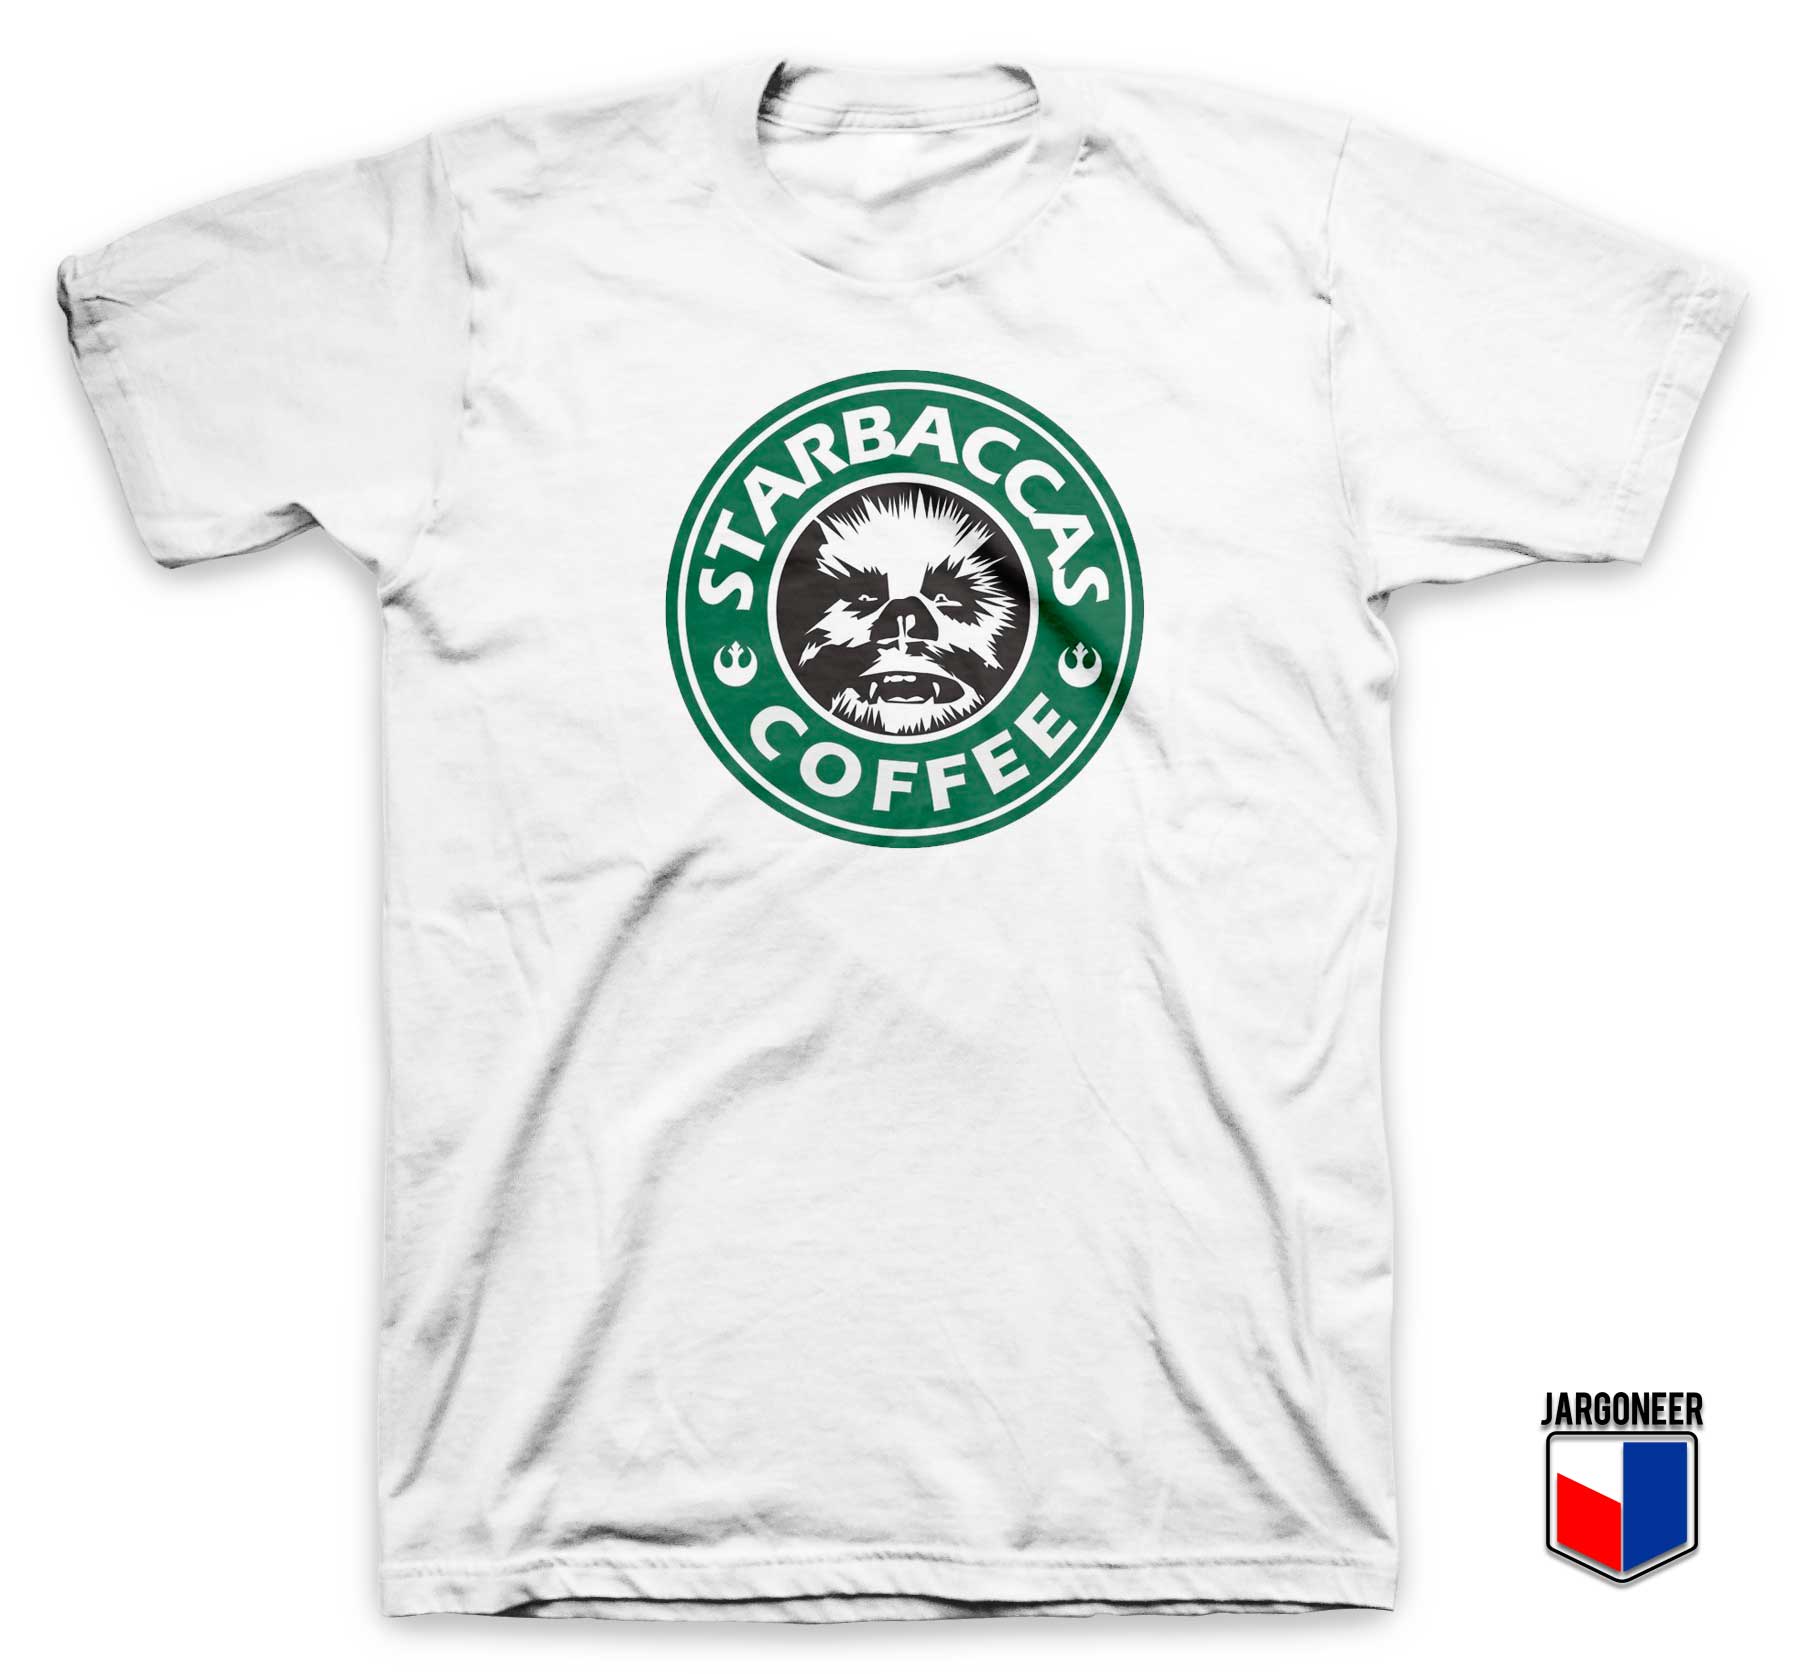 Starbaccas Coffee Logo T Shirt - Shop Unique Graphic Cool Shirt Designs